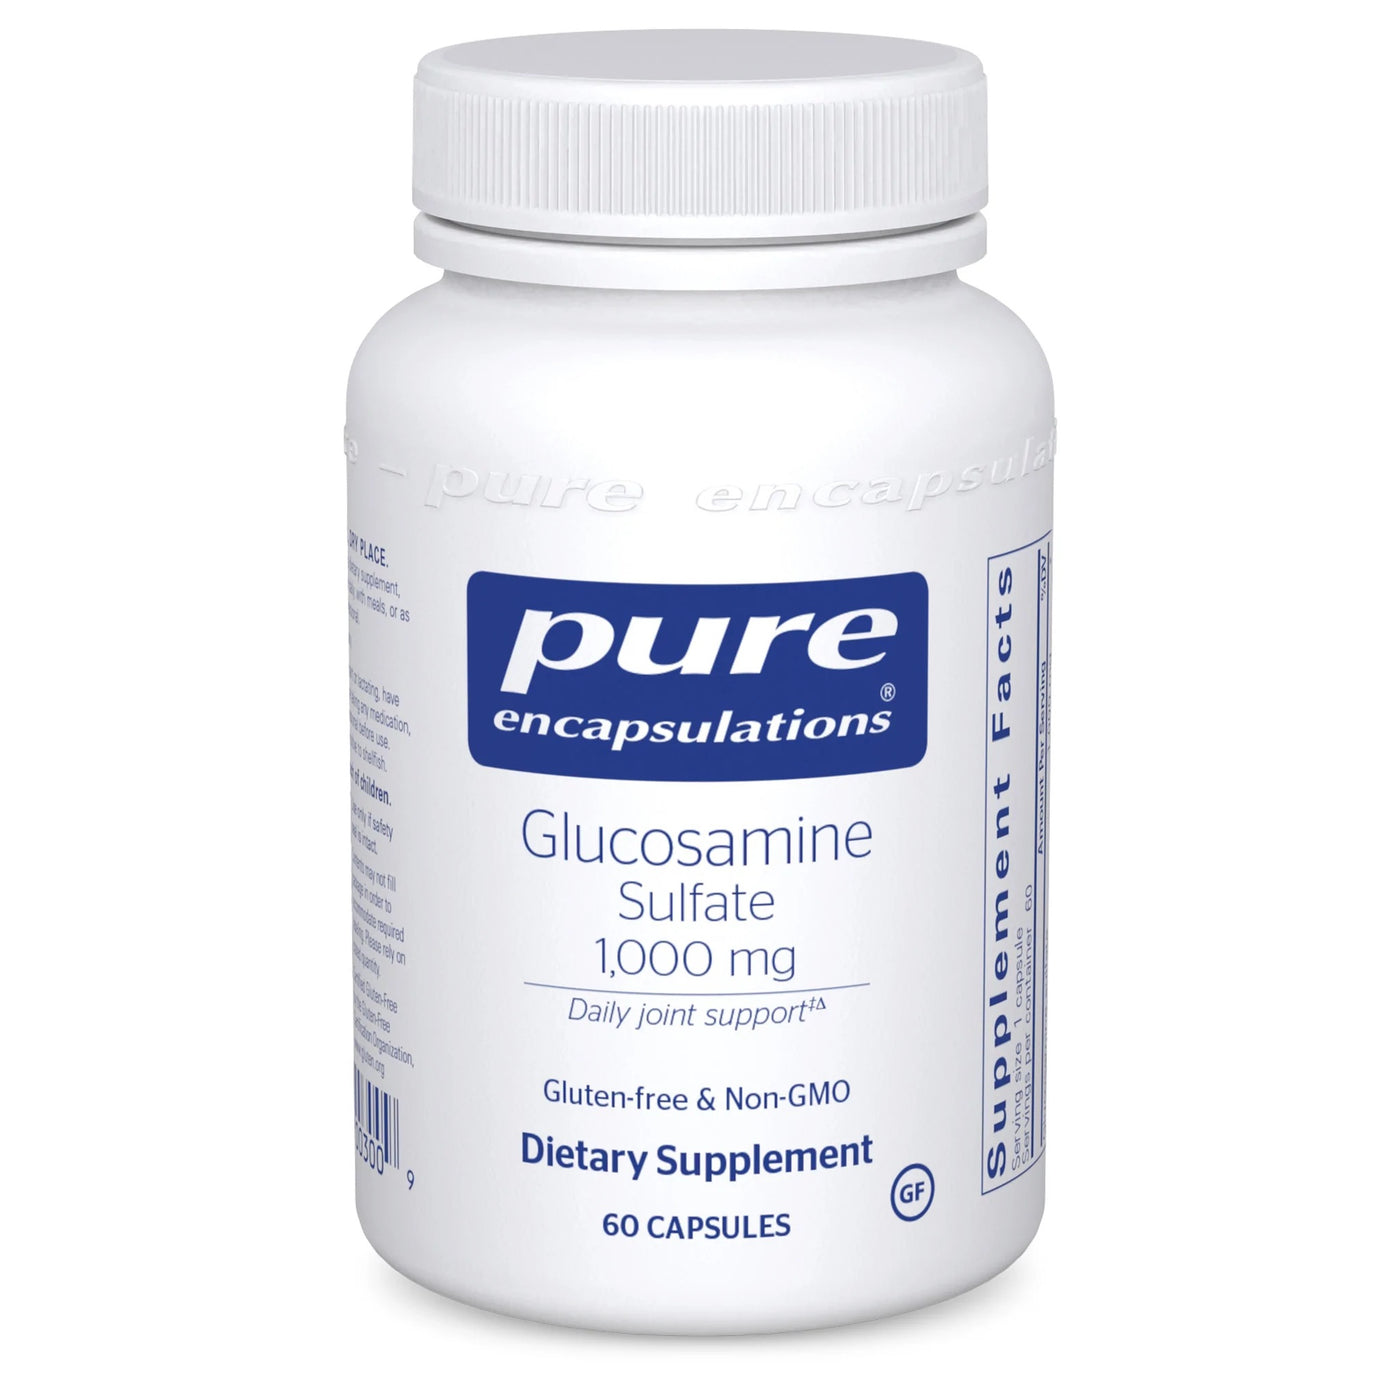 Glucosamine Sulfate 1,000 mg Supplement